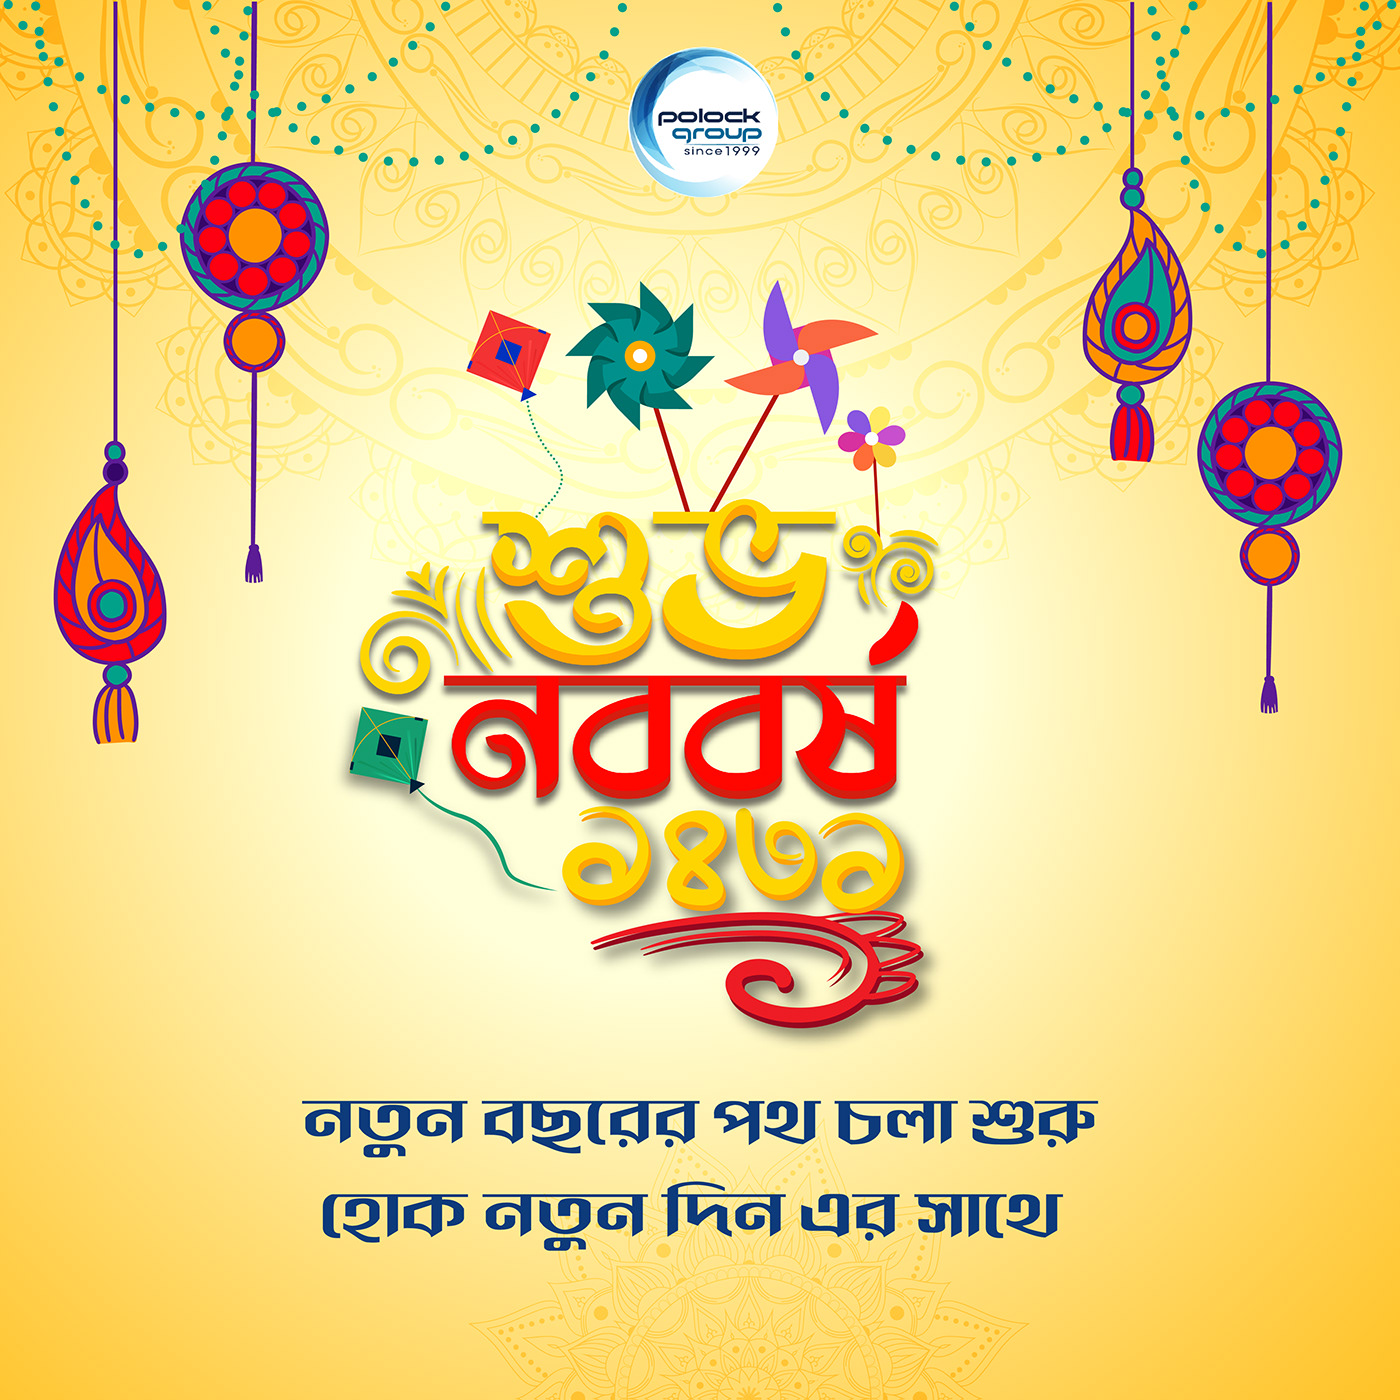 Pohela Boishakh محمود درويش  Bengali New Year Social media post Socialmedia marketing   Advertising  banner design Shuvo Noboborsho